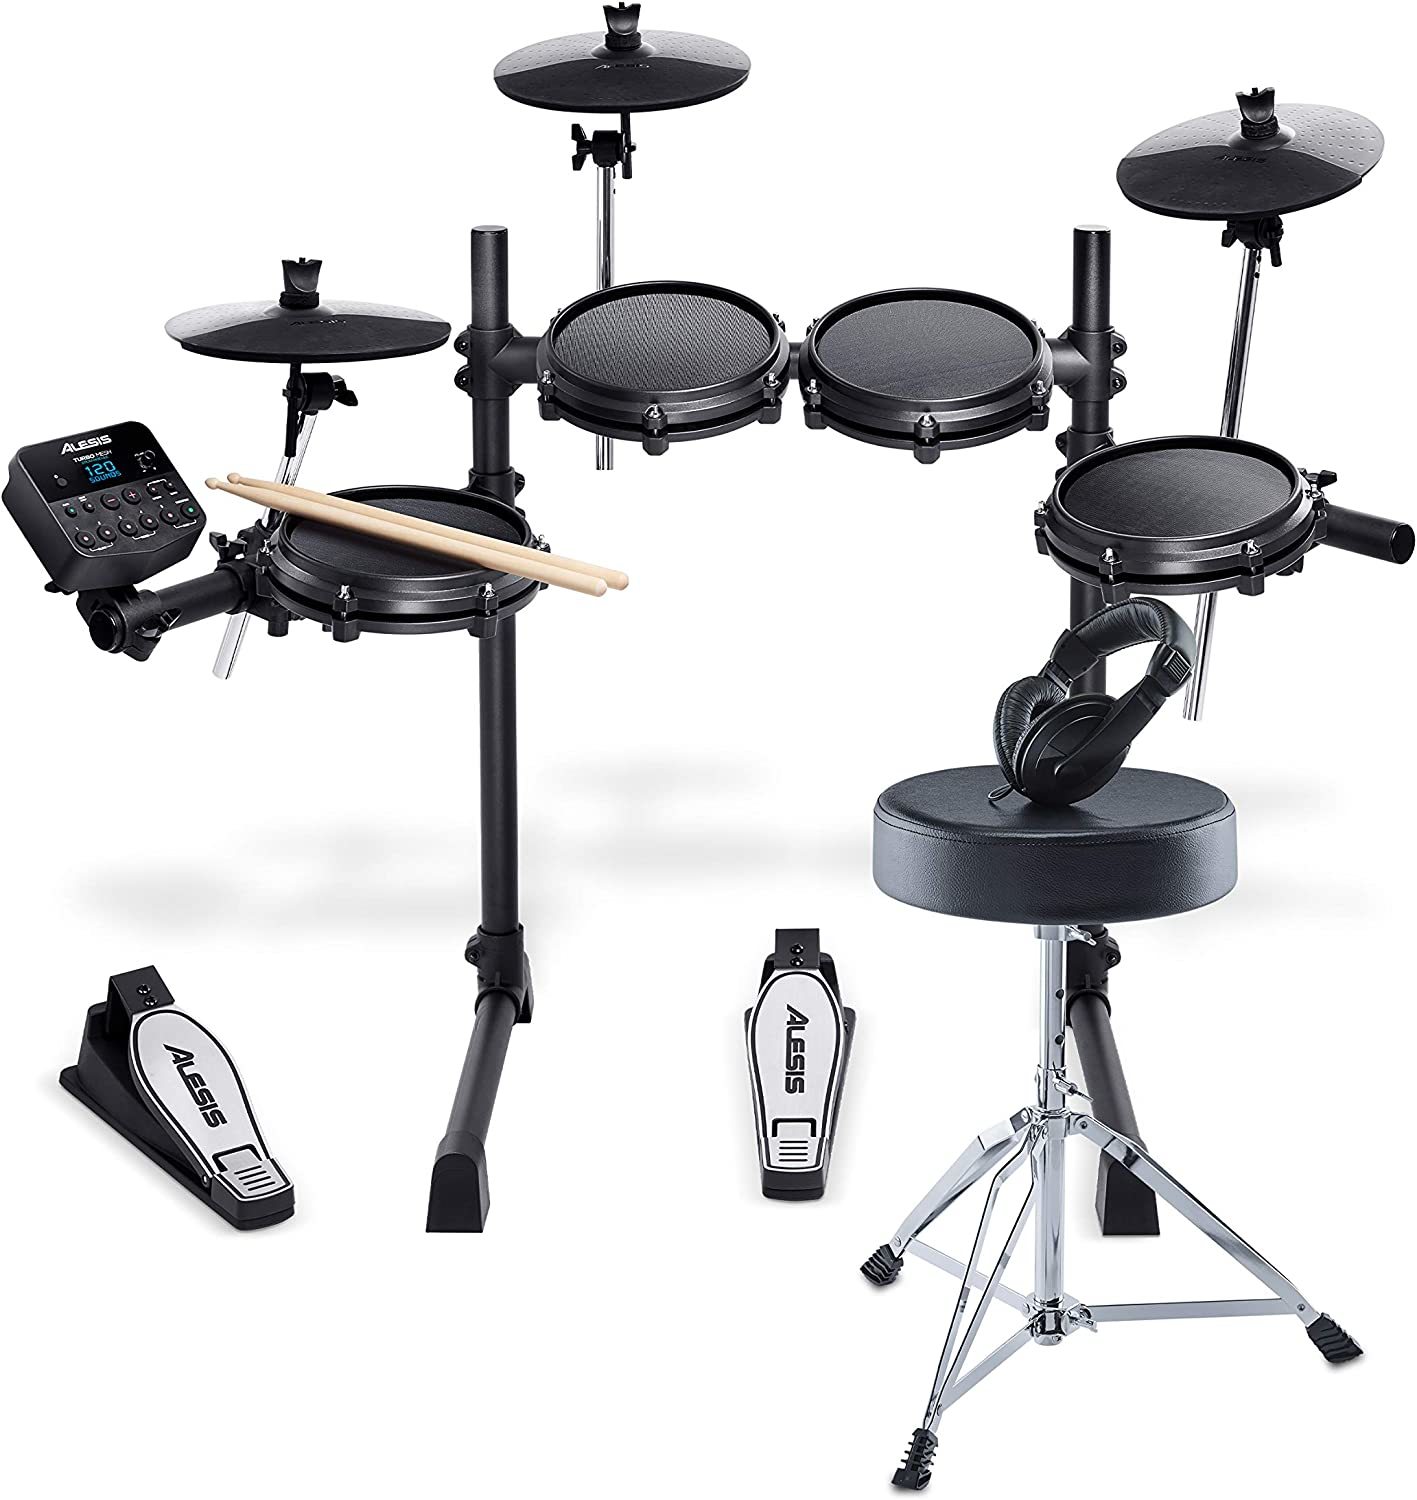 Alesis Drums Turbo Mesh Kit Bundle – Complete Electric Drum Set With a - $555.99